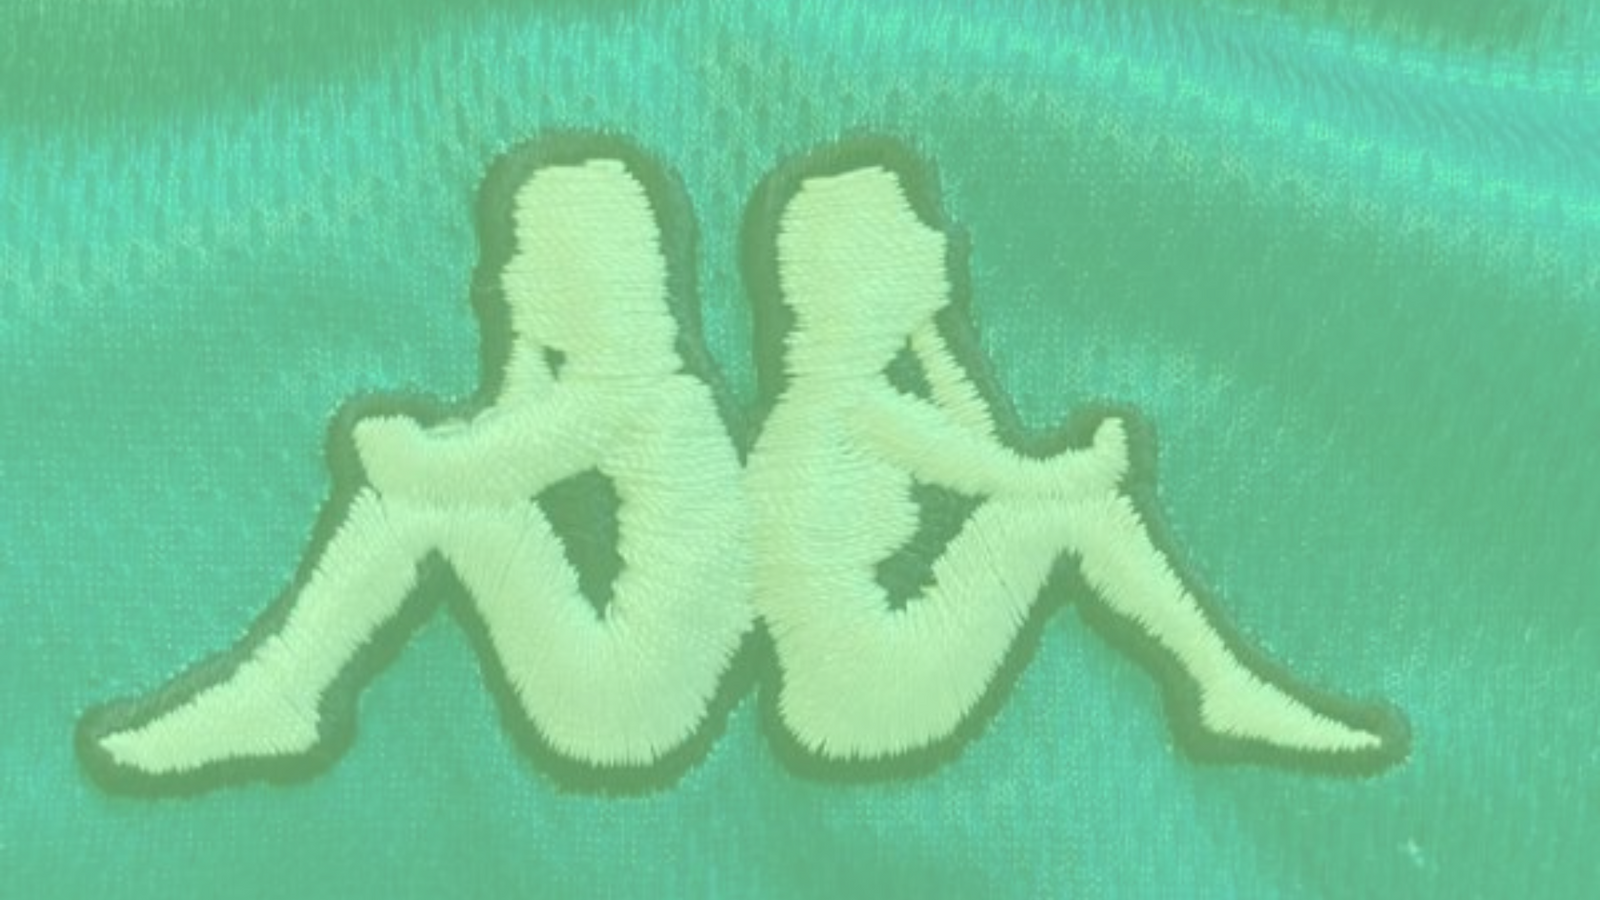 T-shirt Kappa Logo PNG - area, brand, clothing, jacket, kappa